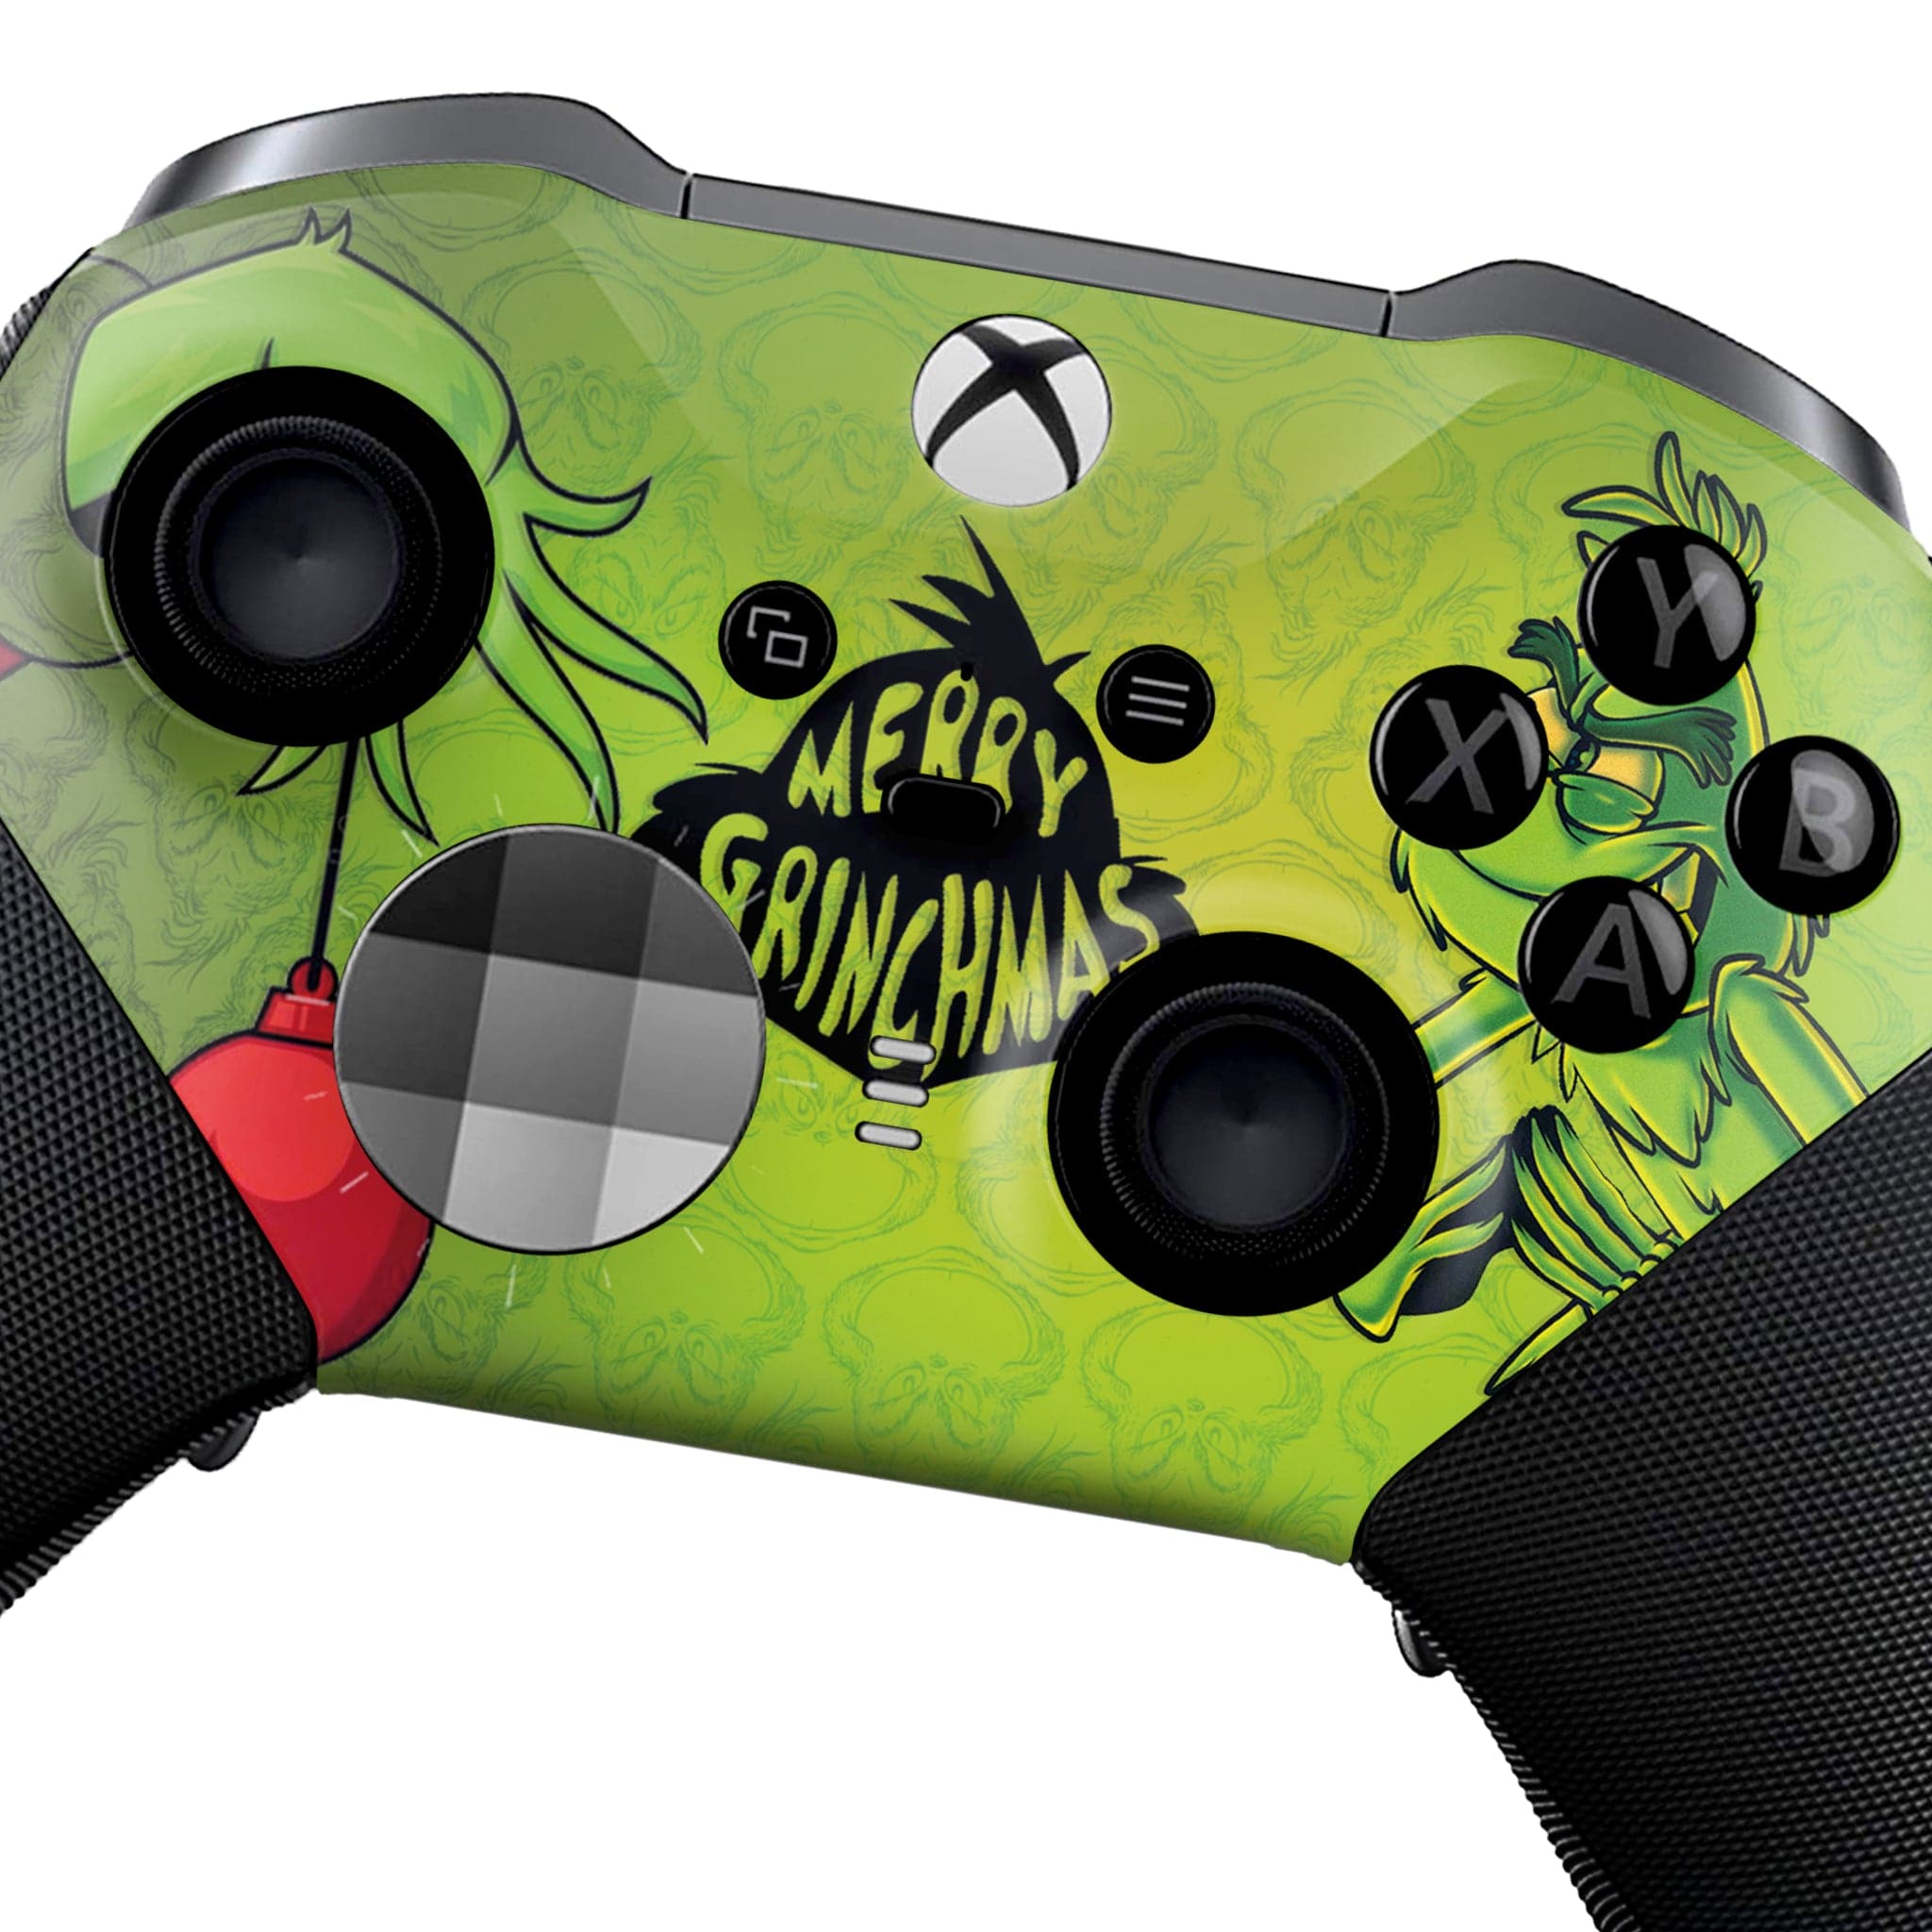 Grinch Xbox Elite Series 2 Controller: Custom Xbox Elite Controller